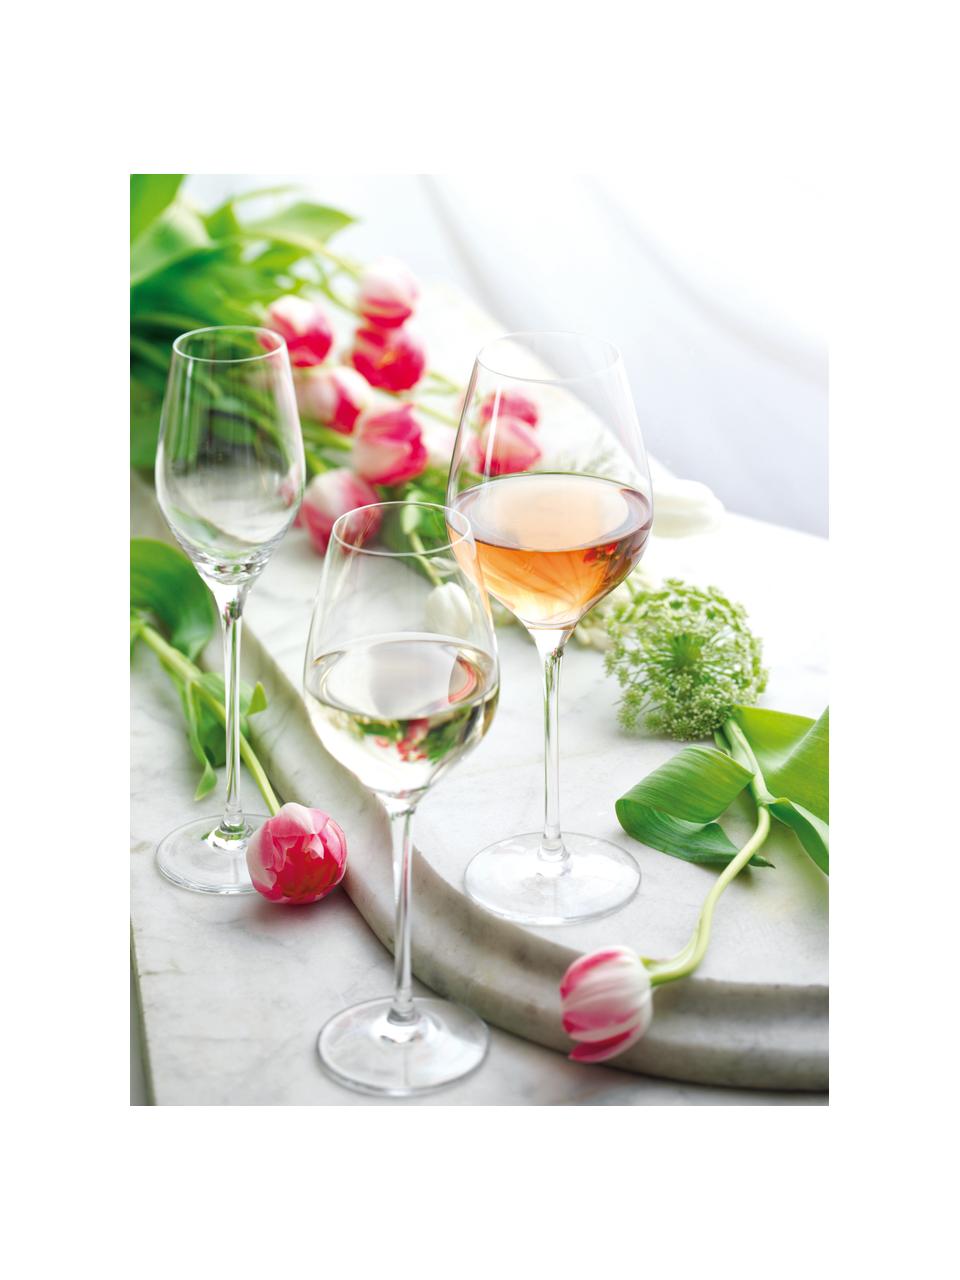 Kristallen witte wijnglazen Exquisit, 6 stuks, Kristalglas, Transparant, Ø 8 x H 23 cm, 420 ml